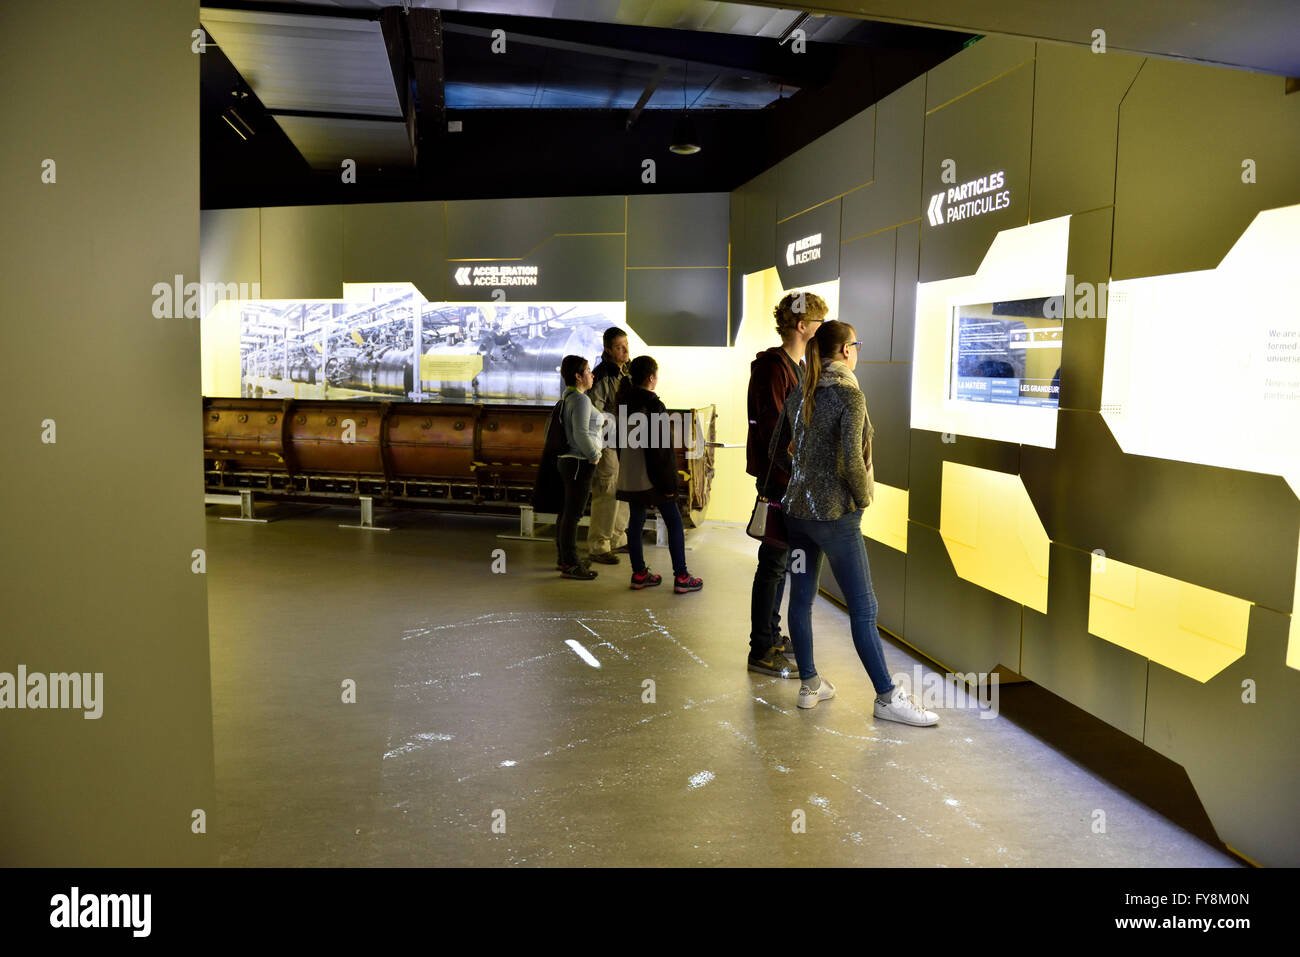 CERN, European Organization for Nuclear Research, reception building Microcosm exhibition area Stock Photo